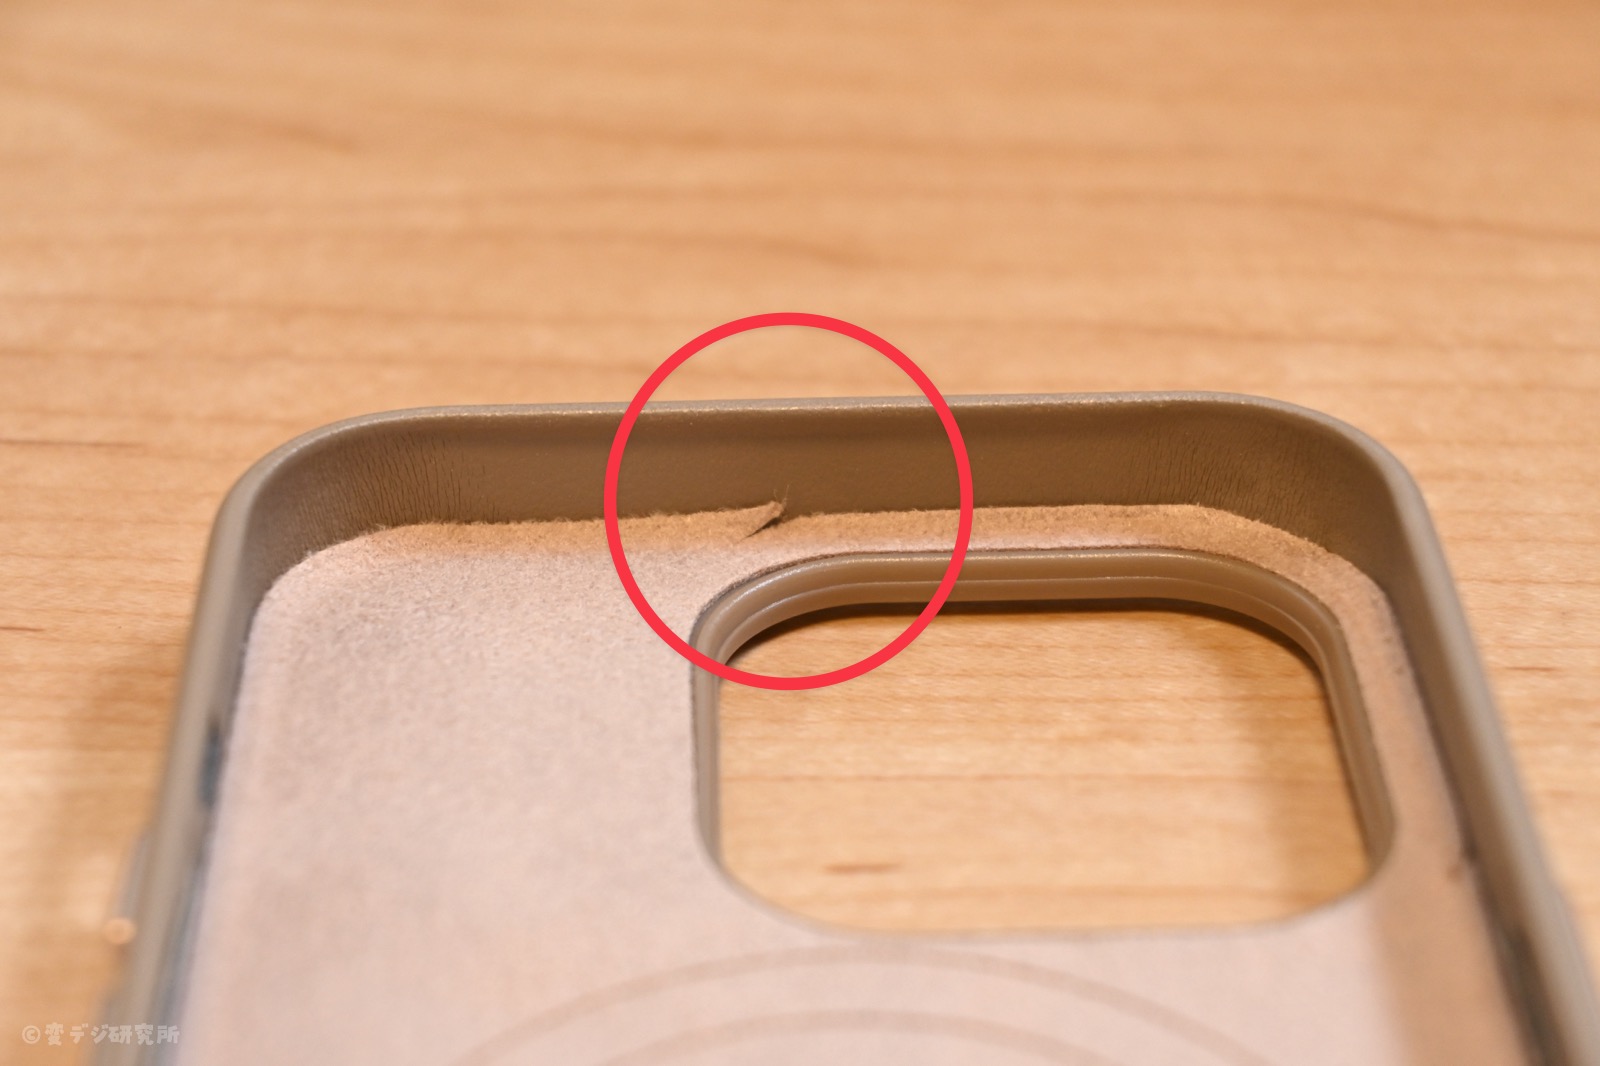 GRAMAS COLORS iPhone case peeling